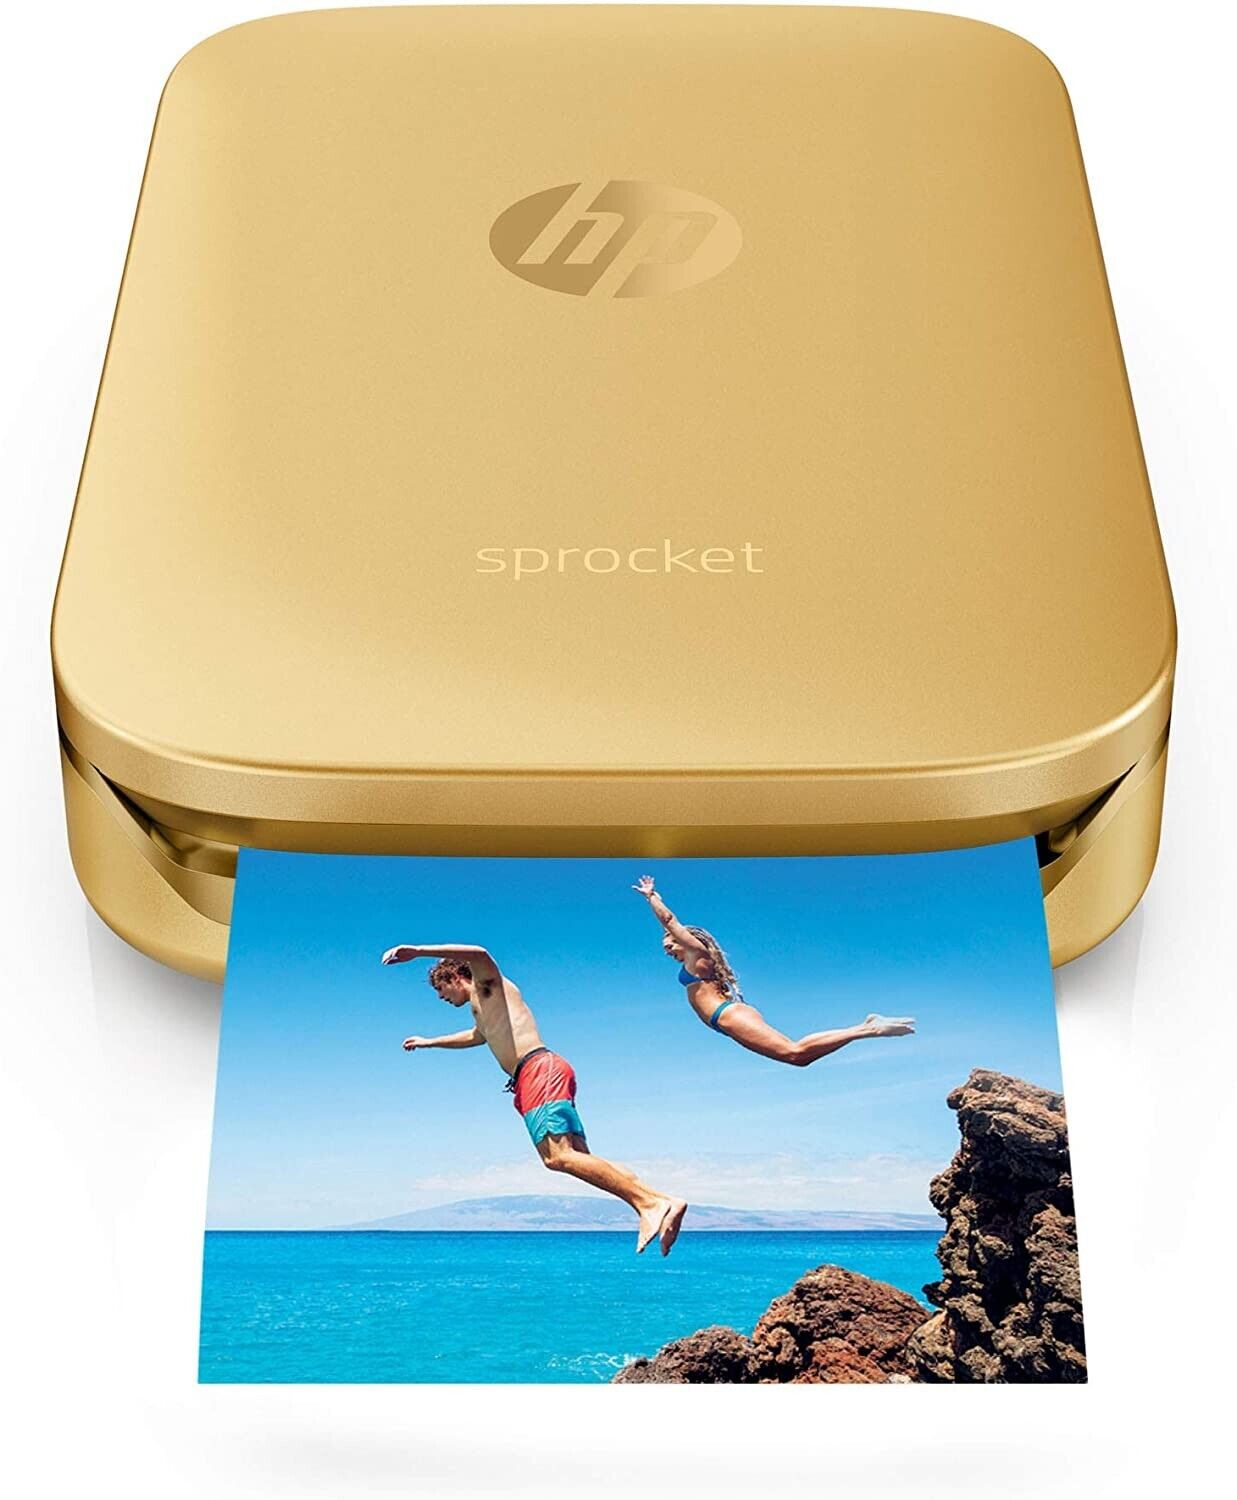 Brand New HP Sprocket Portable Photo Printer – Gold (Z3Z94A) 